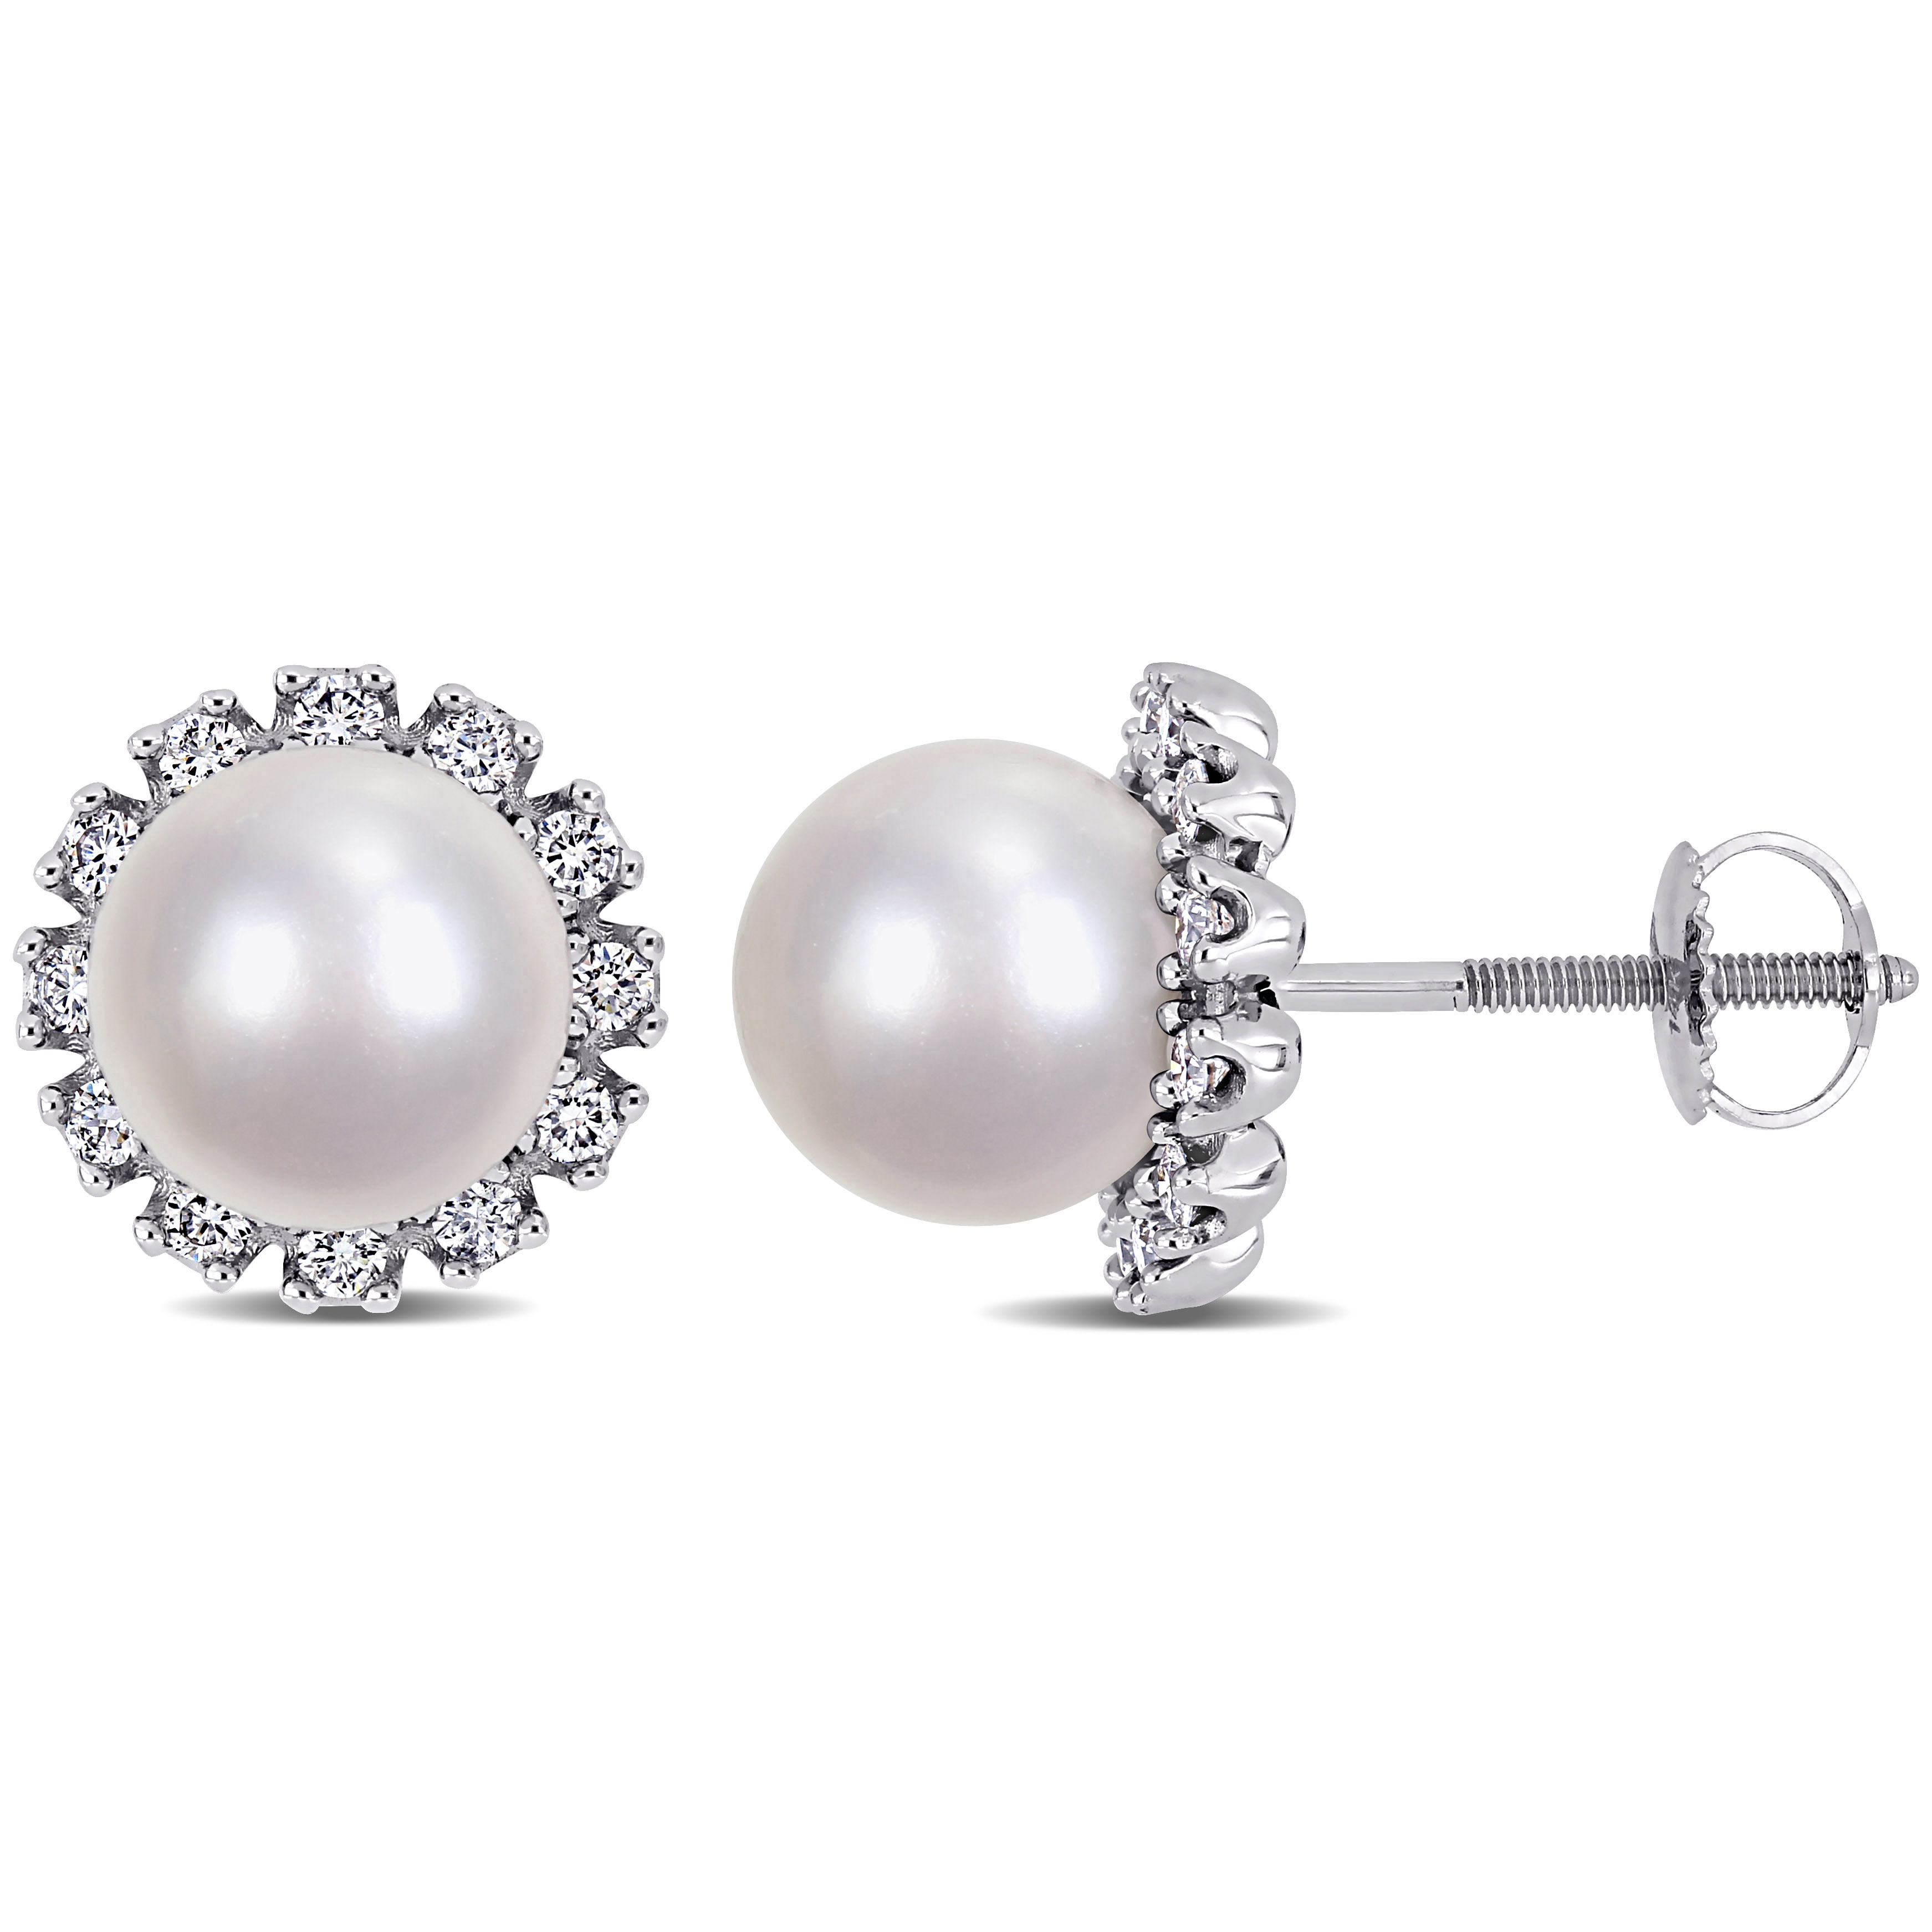 3/8 CT TW Diamond and 8 - 8.5 MM White Japanese Akoya Pearl Flower Stud Earrings in 14k White Gold